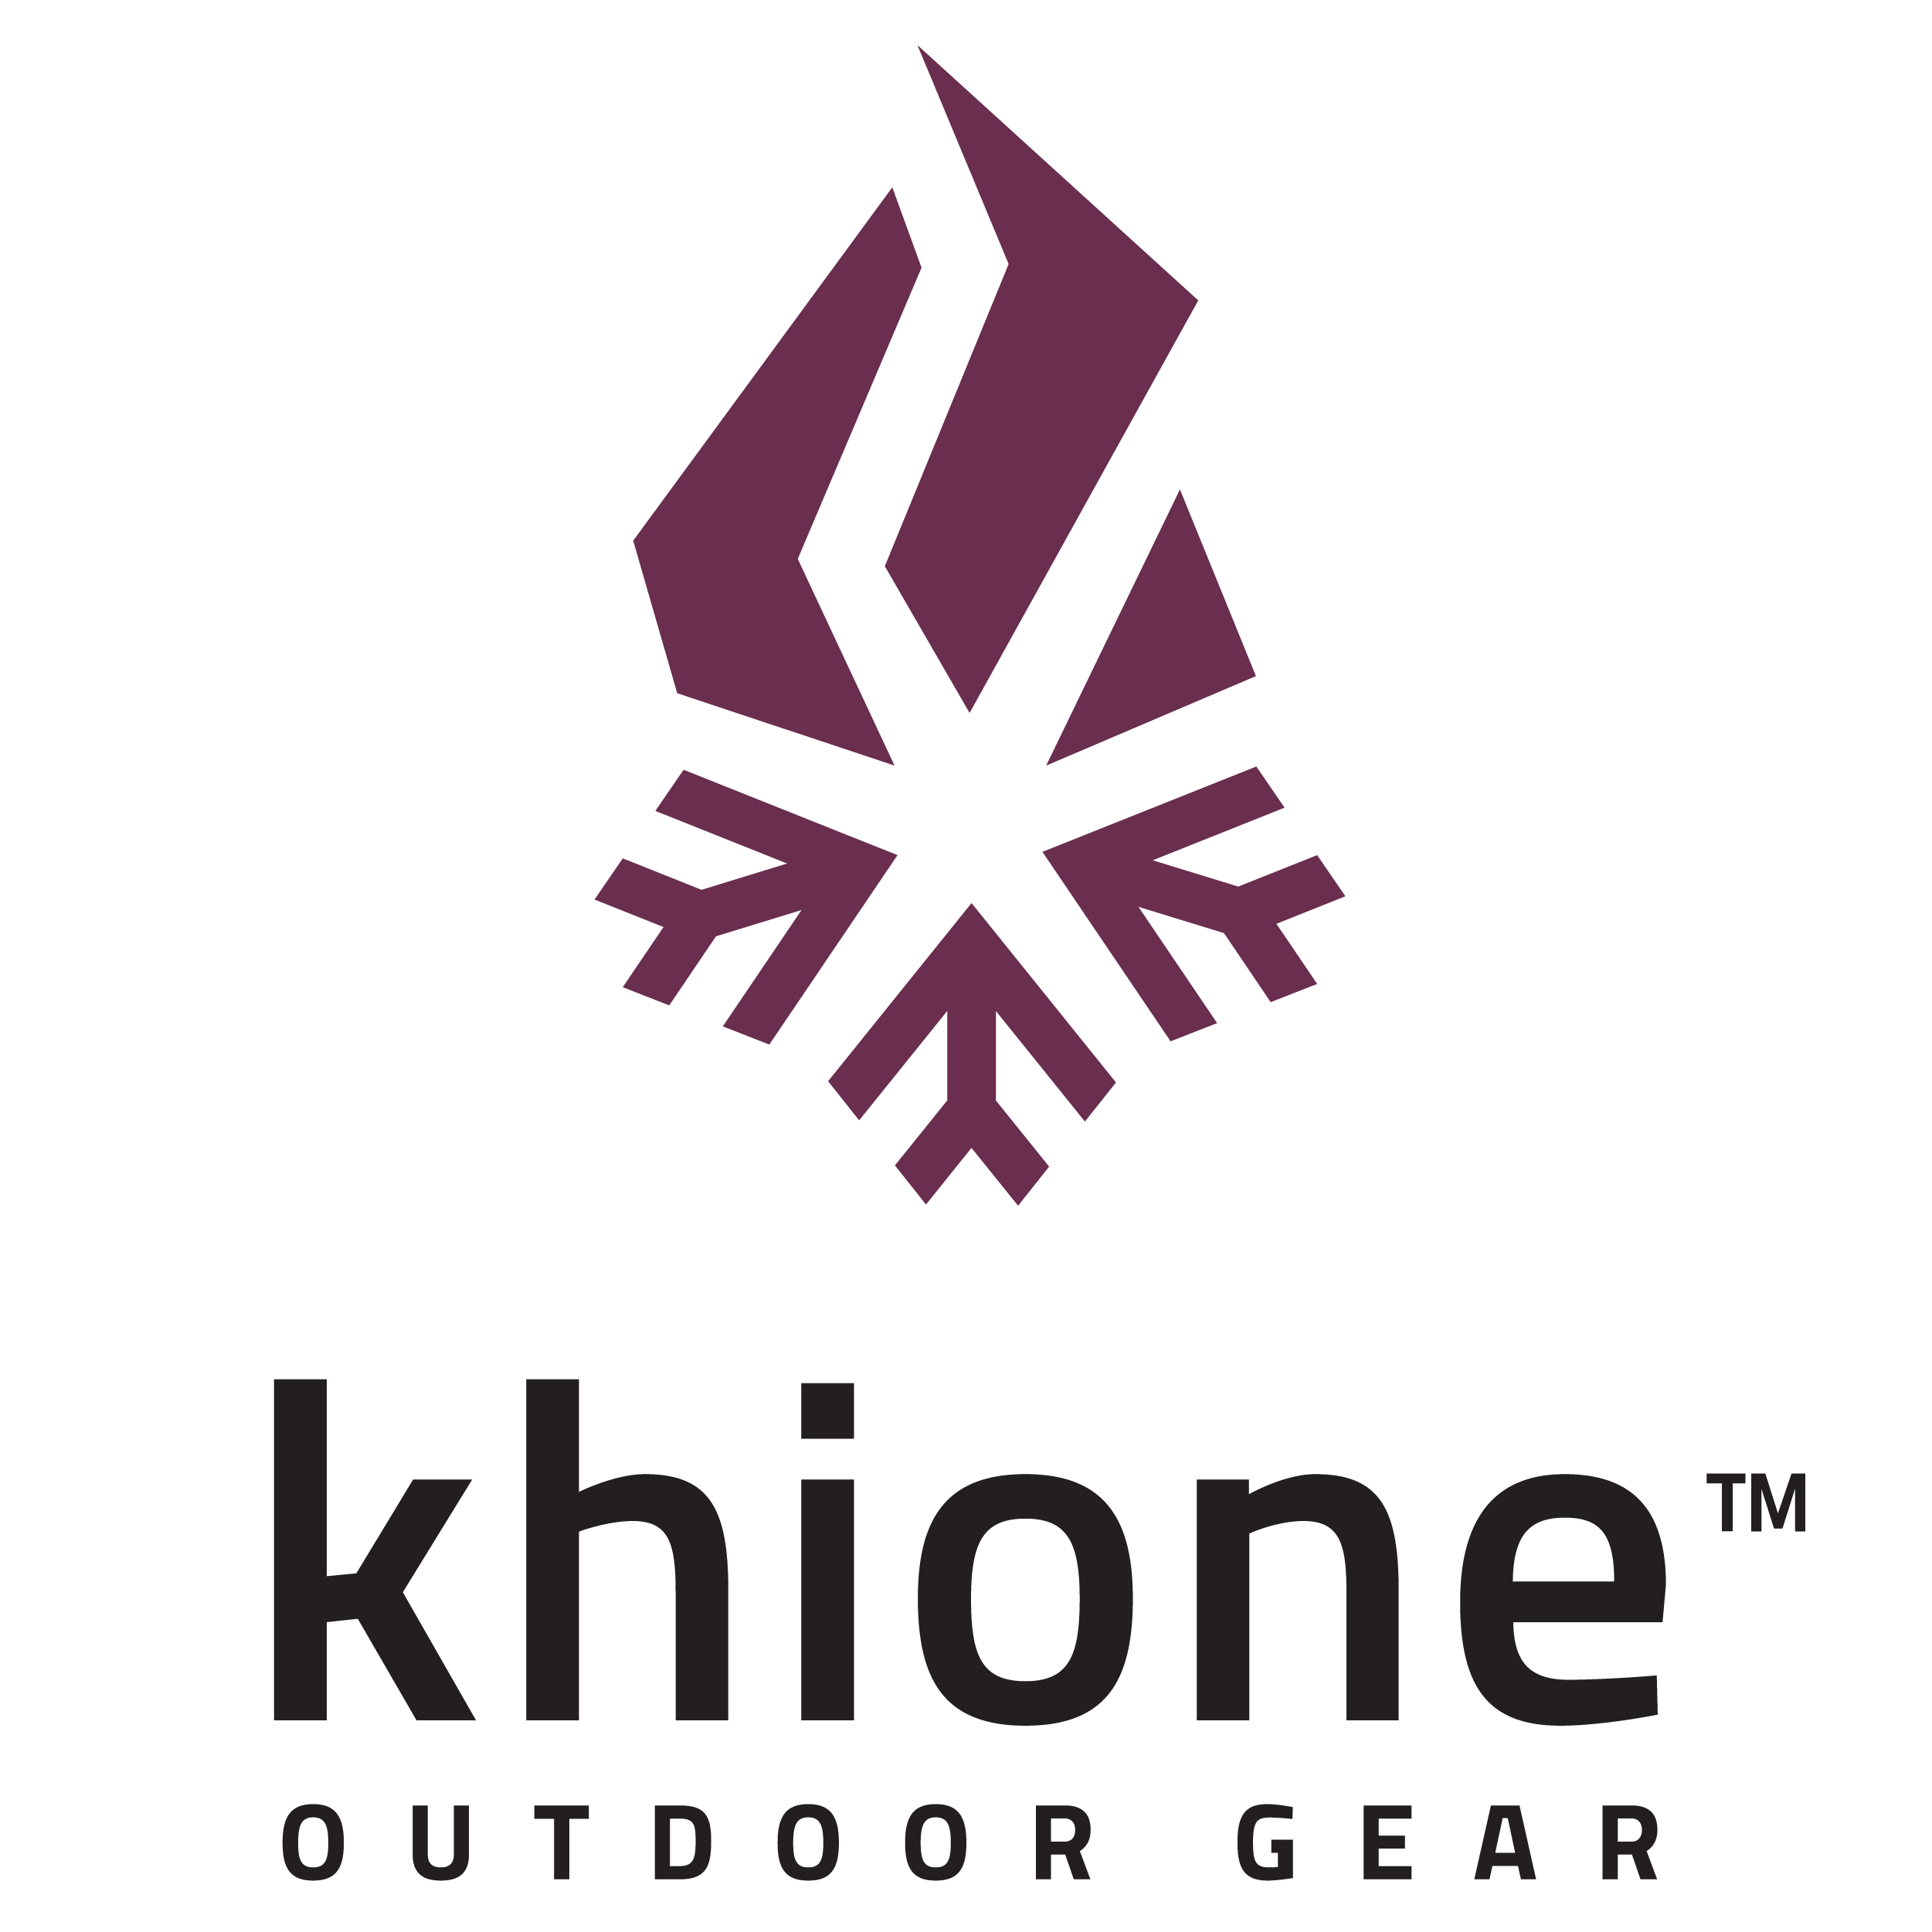 Outdoor Gear Logo - Hammock and Straps. Khione Outdoor Gear